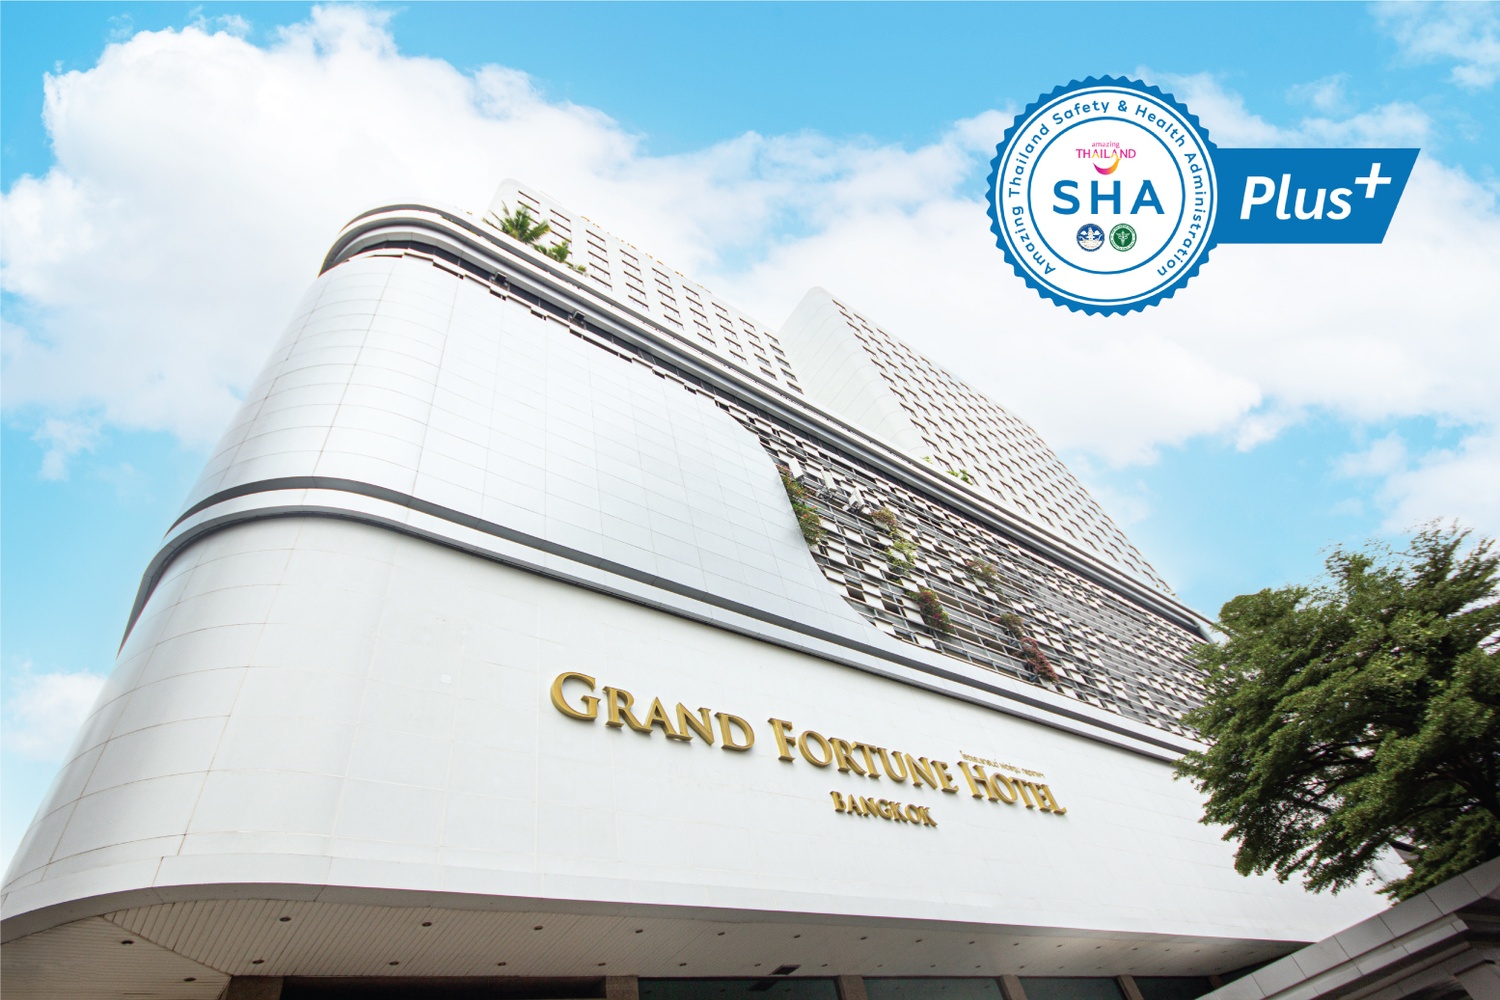 Grand Fortune Hotel Bangkok - Image 0